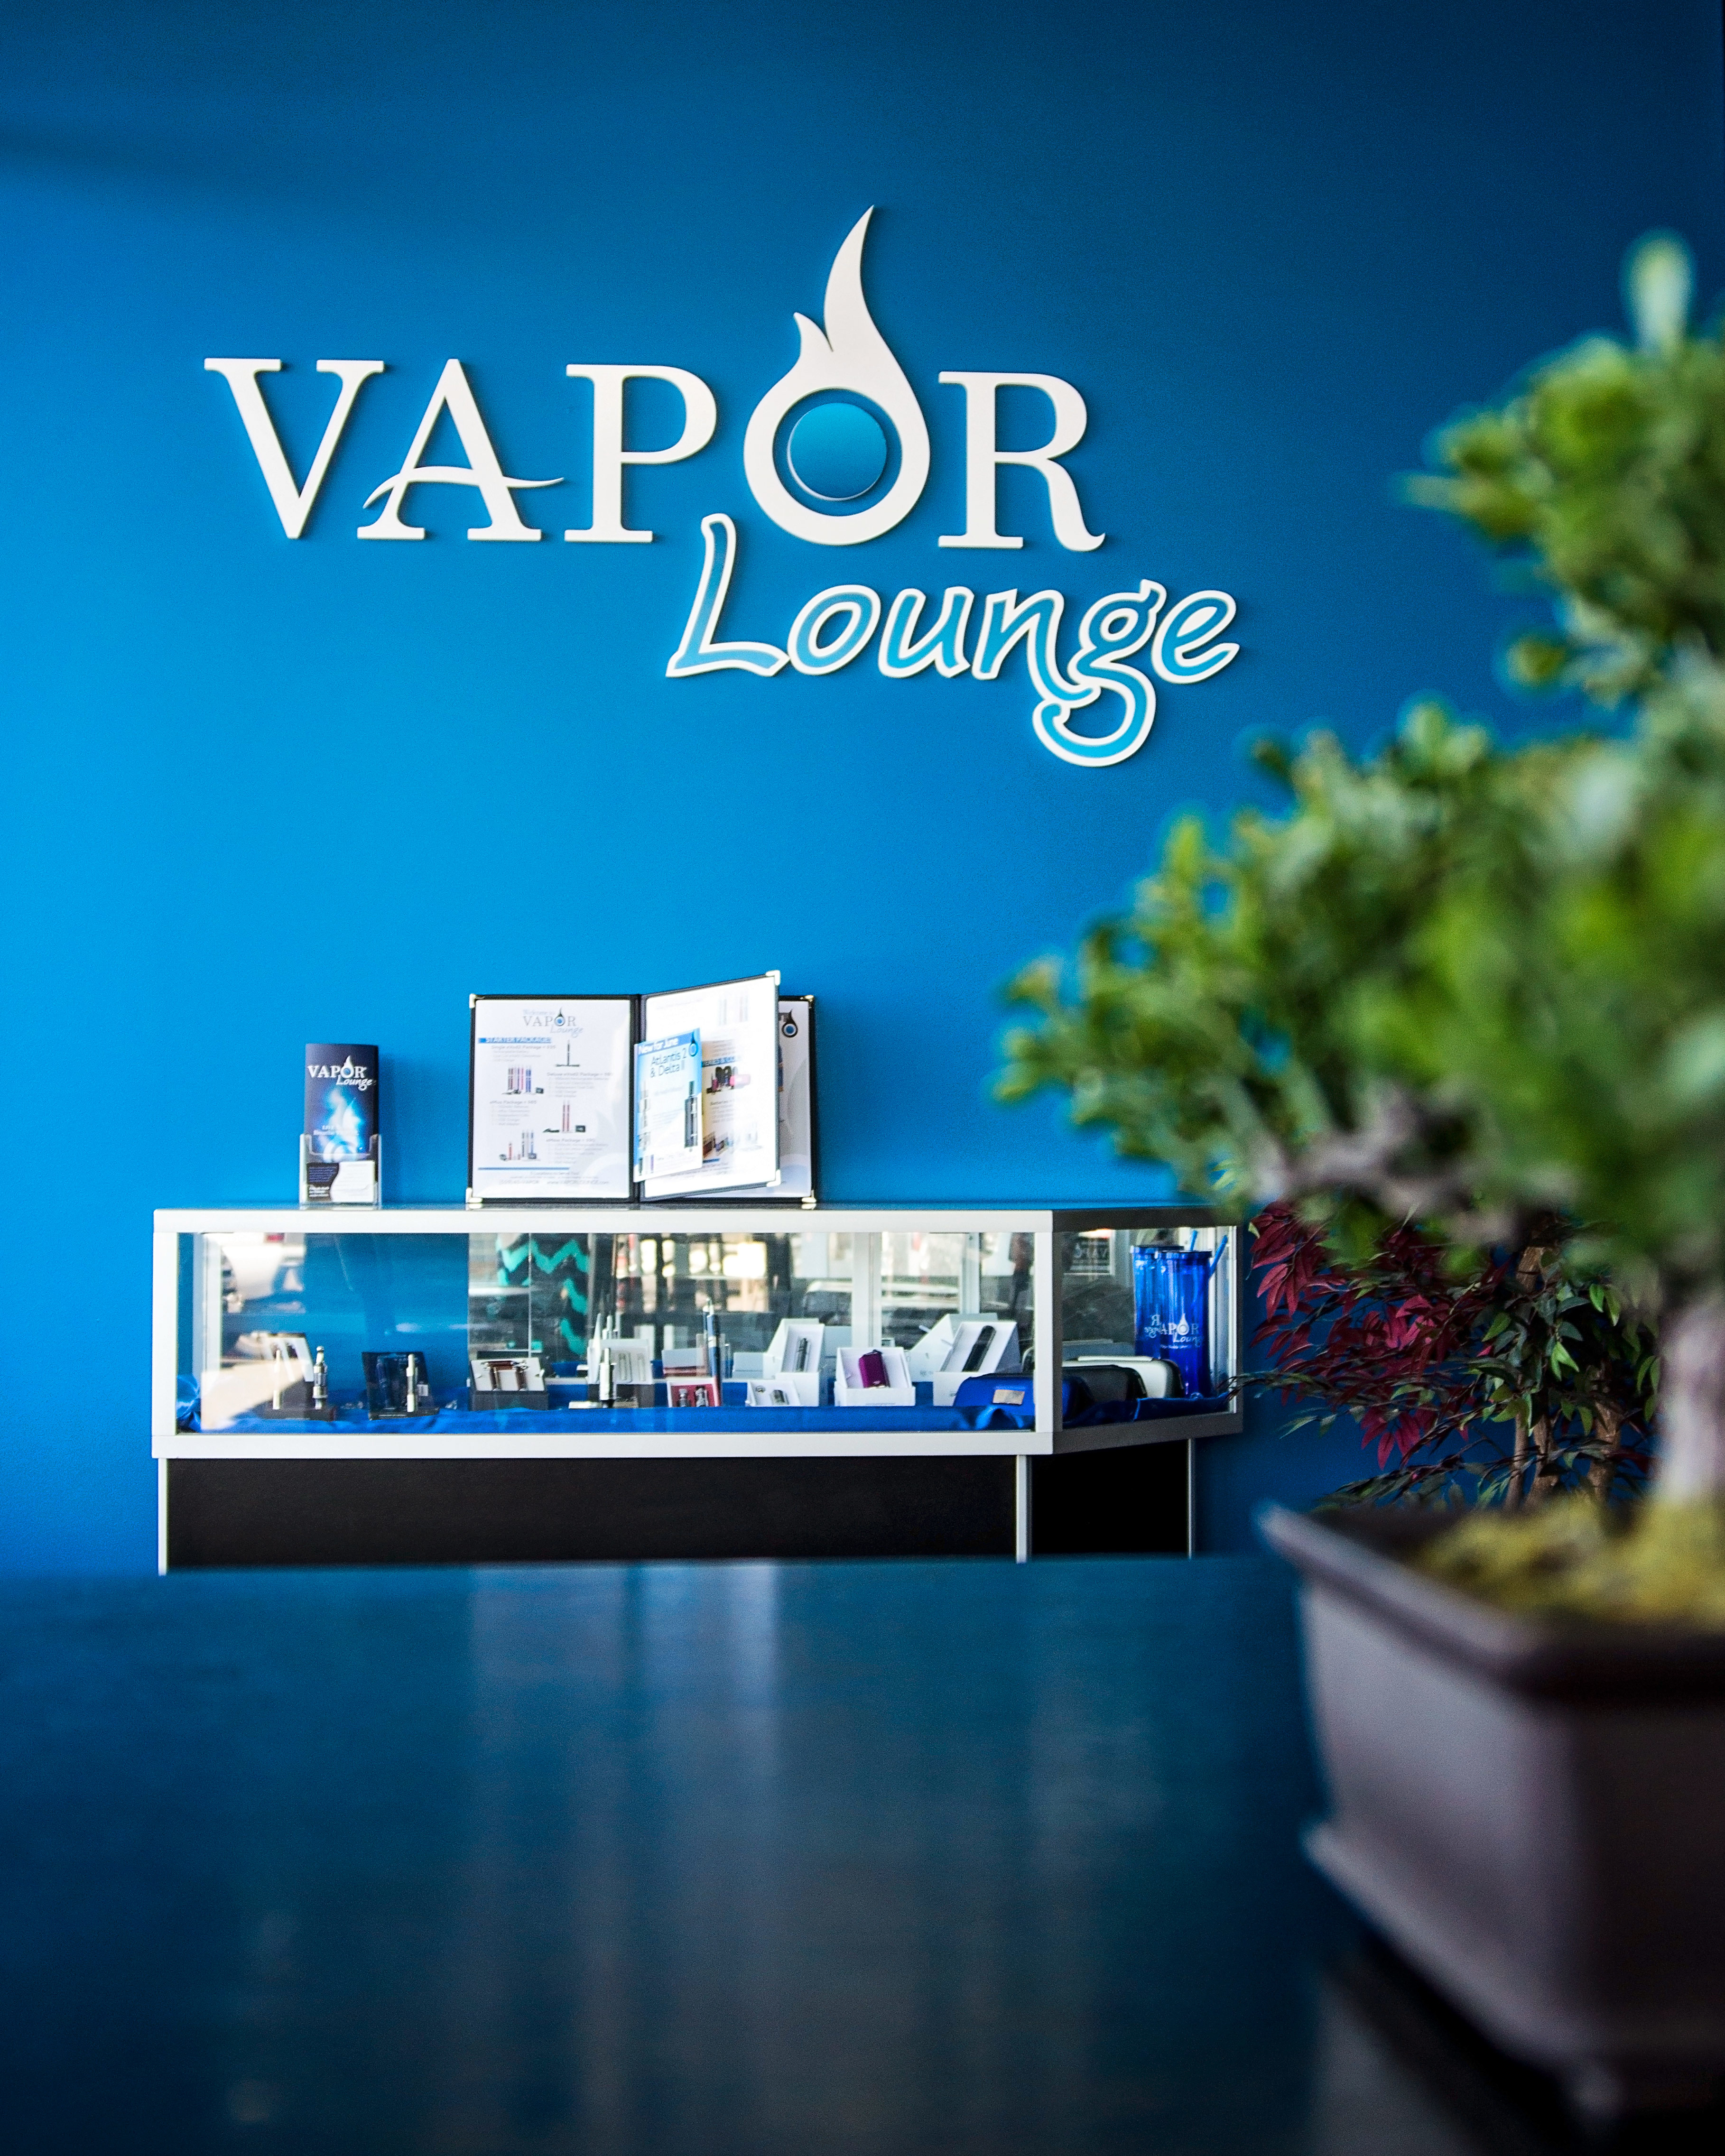 Vapor Lounge - Town Square Photo